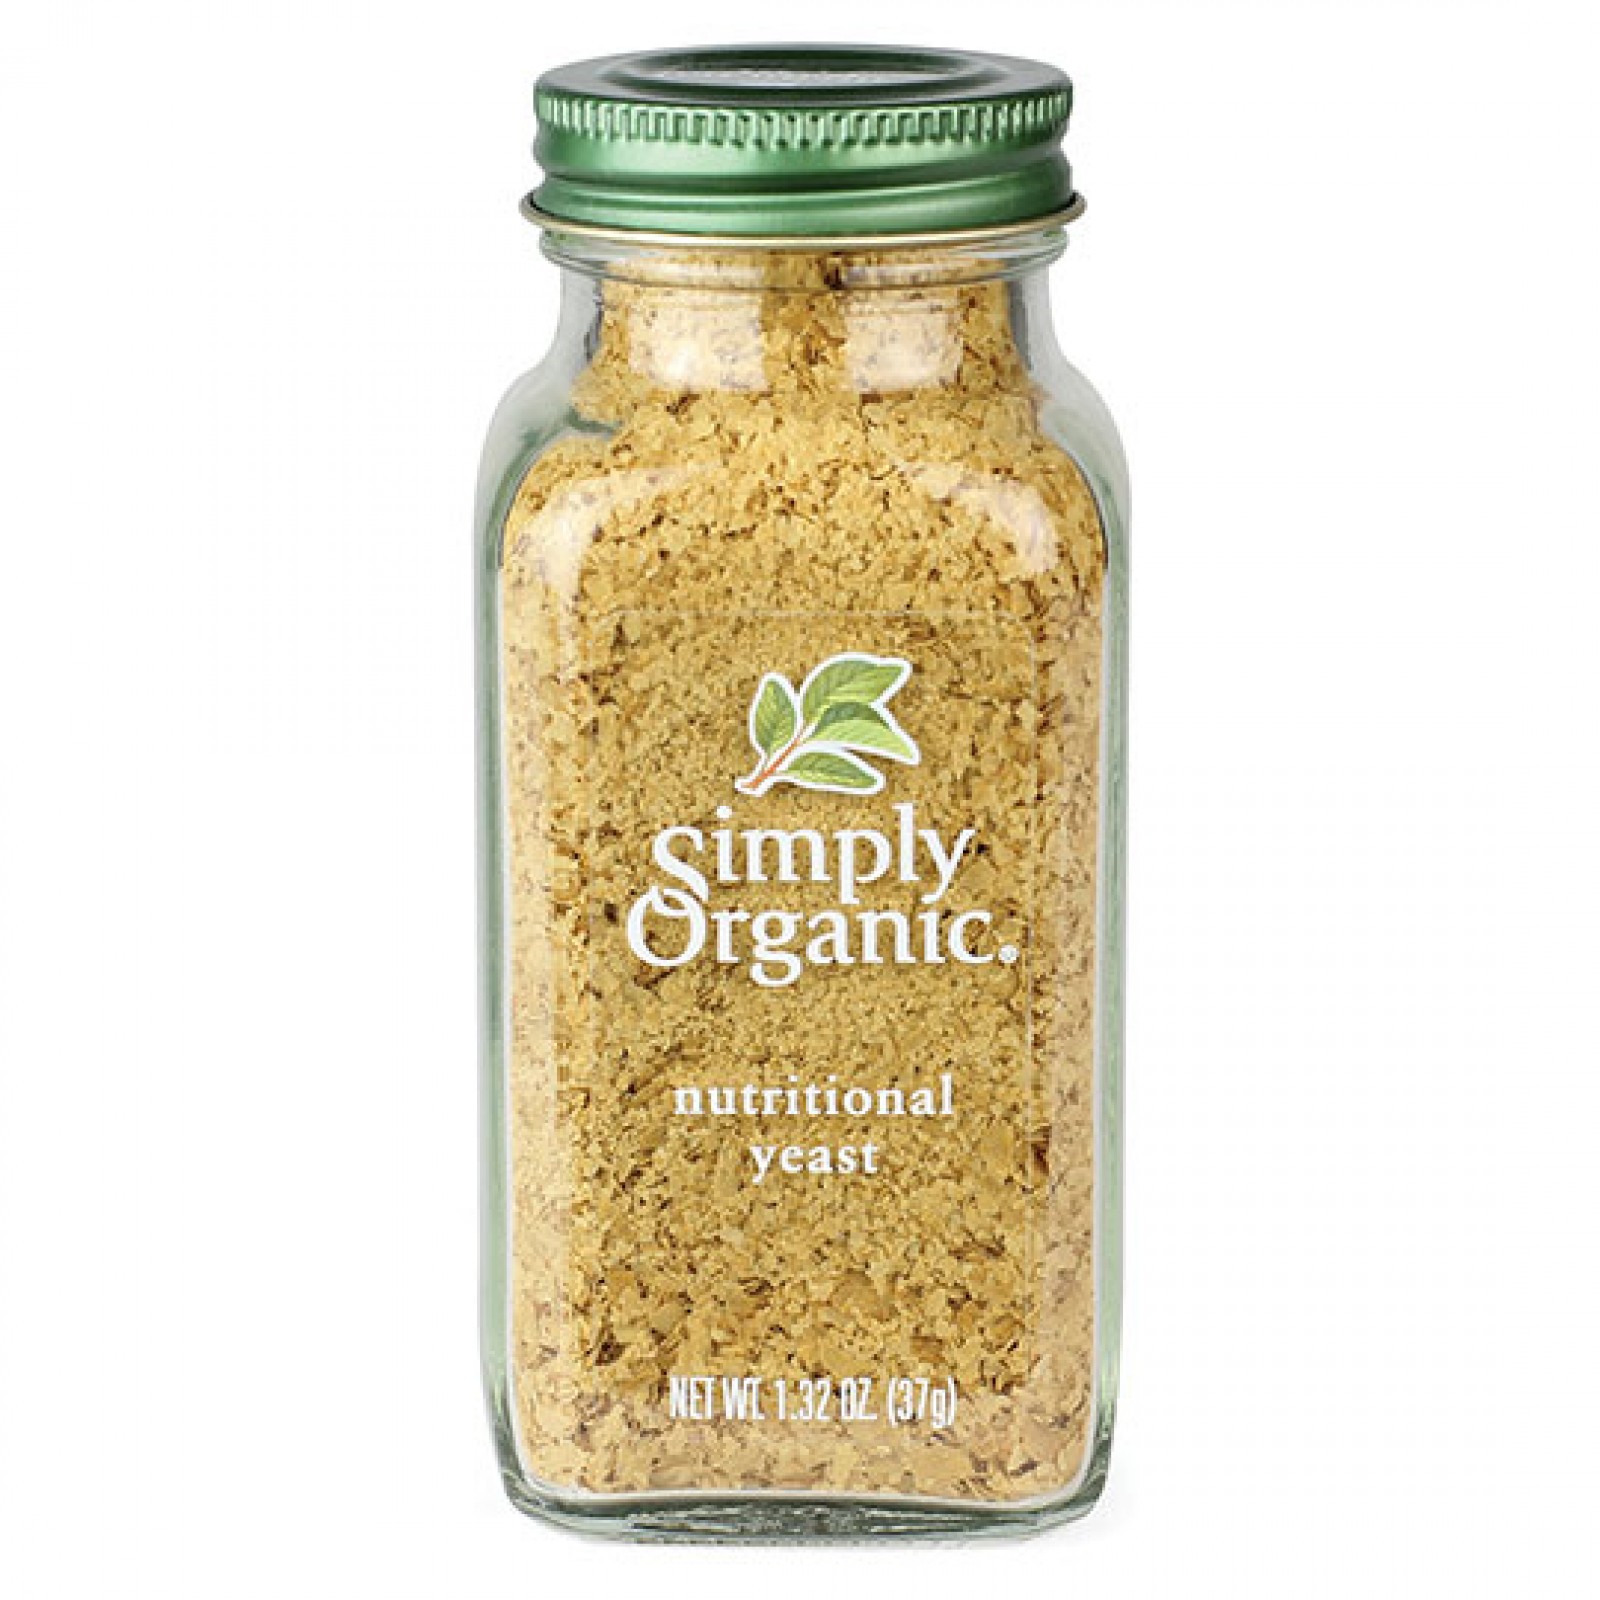 Simply Organic Nutritional Yeast Seasoning 1.32 oz. - Simply Organic